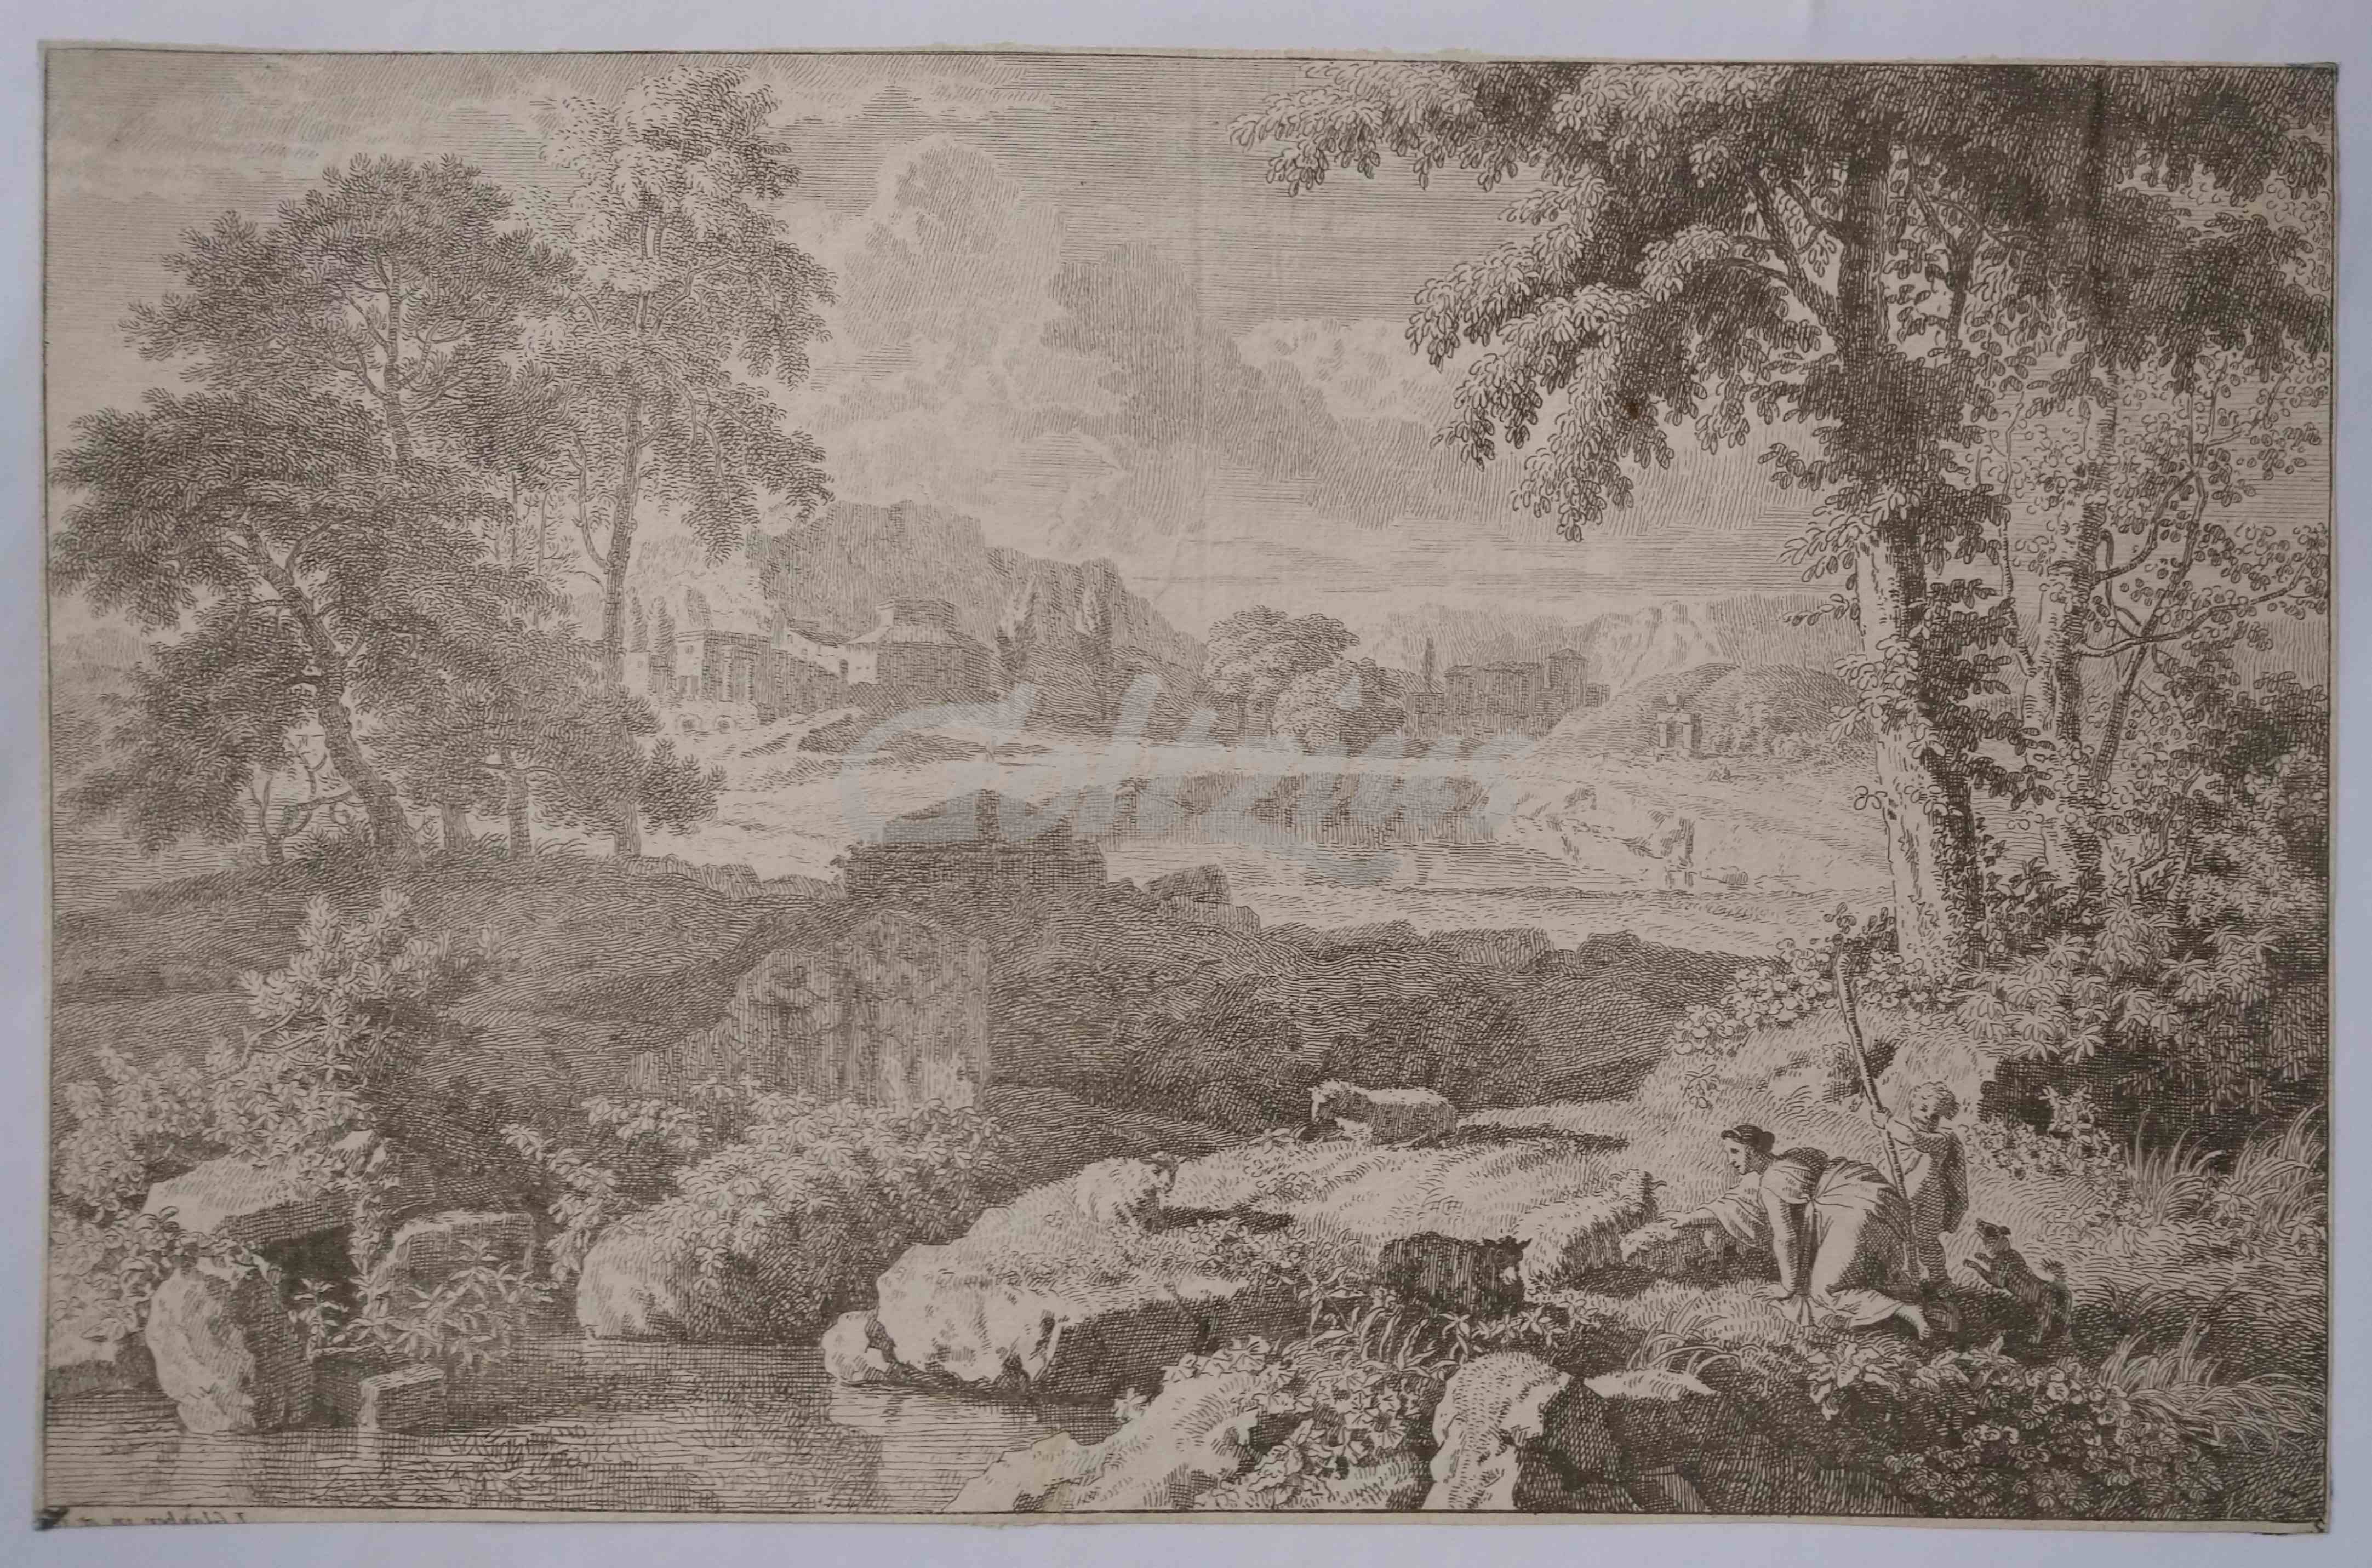 GLAUBER, JOHANNES, Arcadian landscape with shepherdess